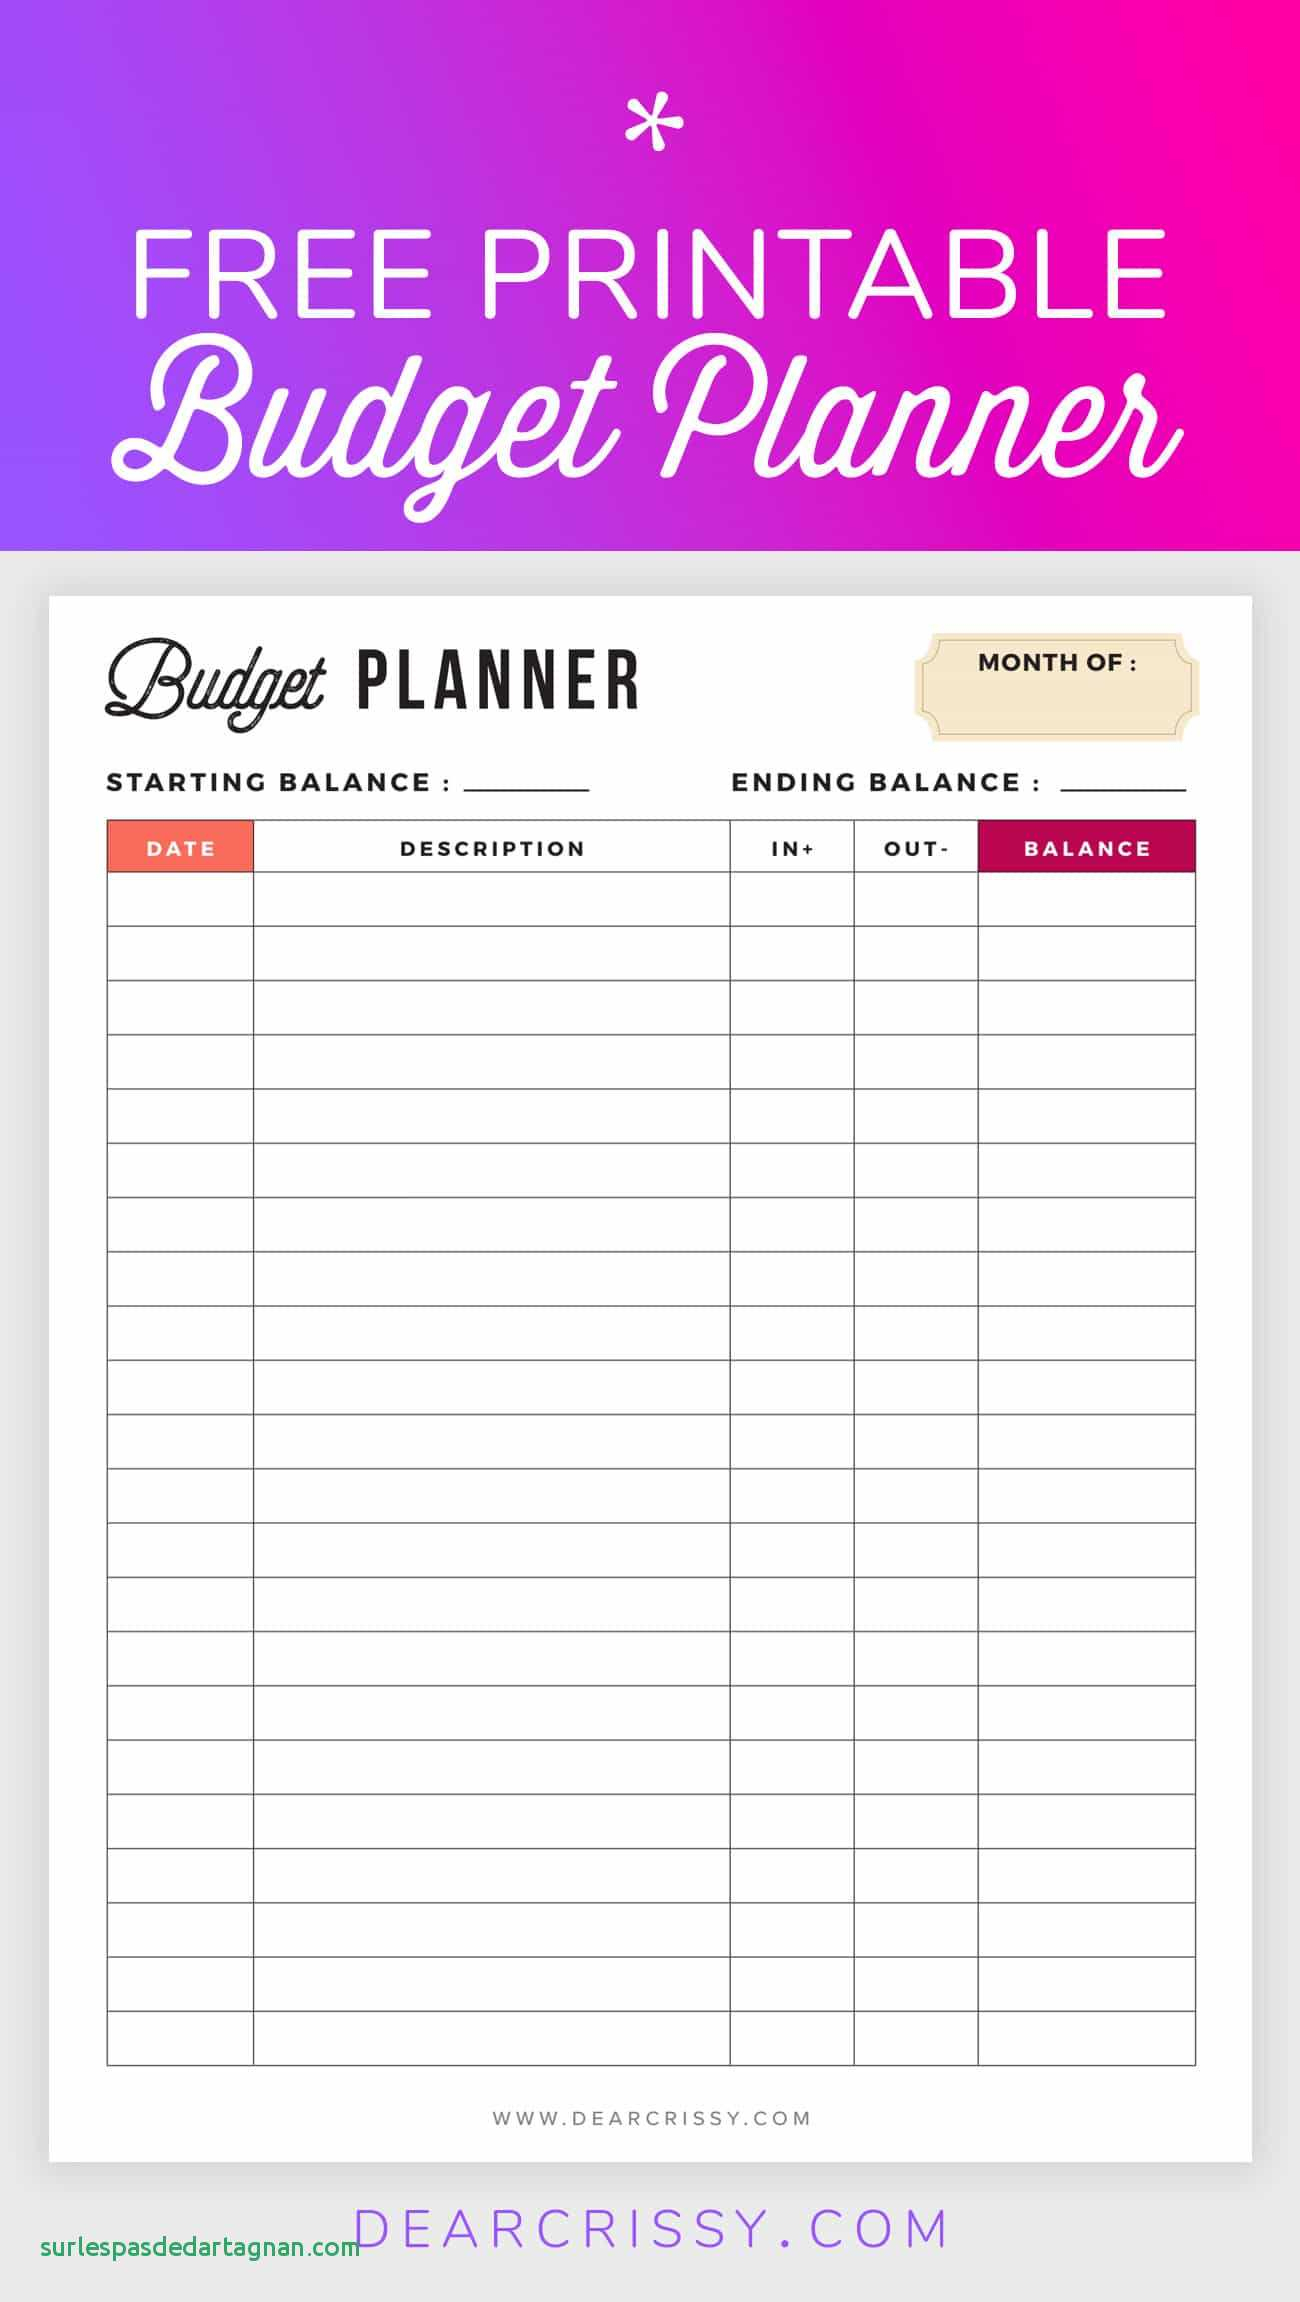 008 Free Budget Planner Template Diy Bud Idealstalist Inspirational - Free Printable Budget Planner Uk